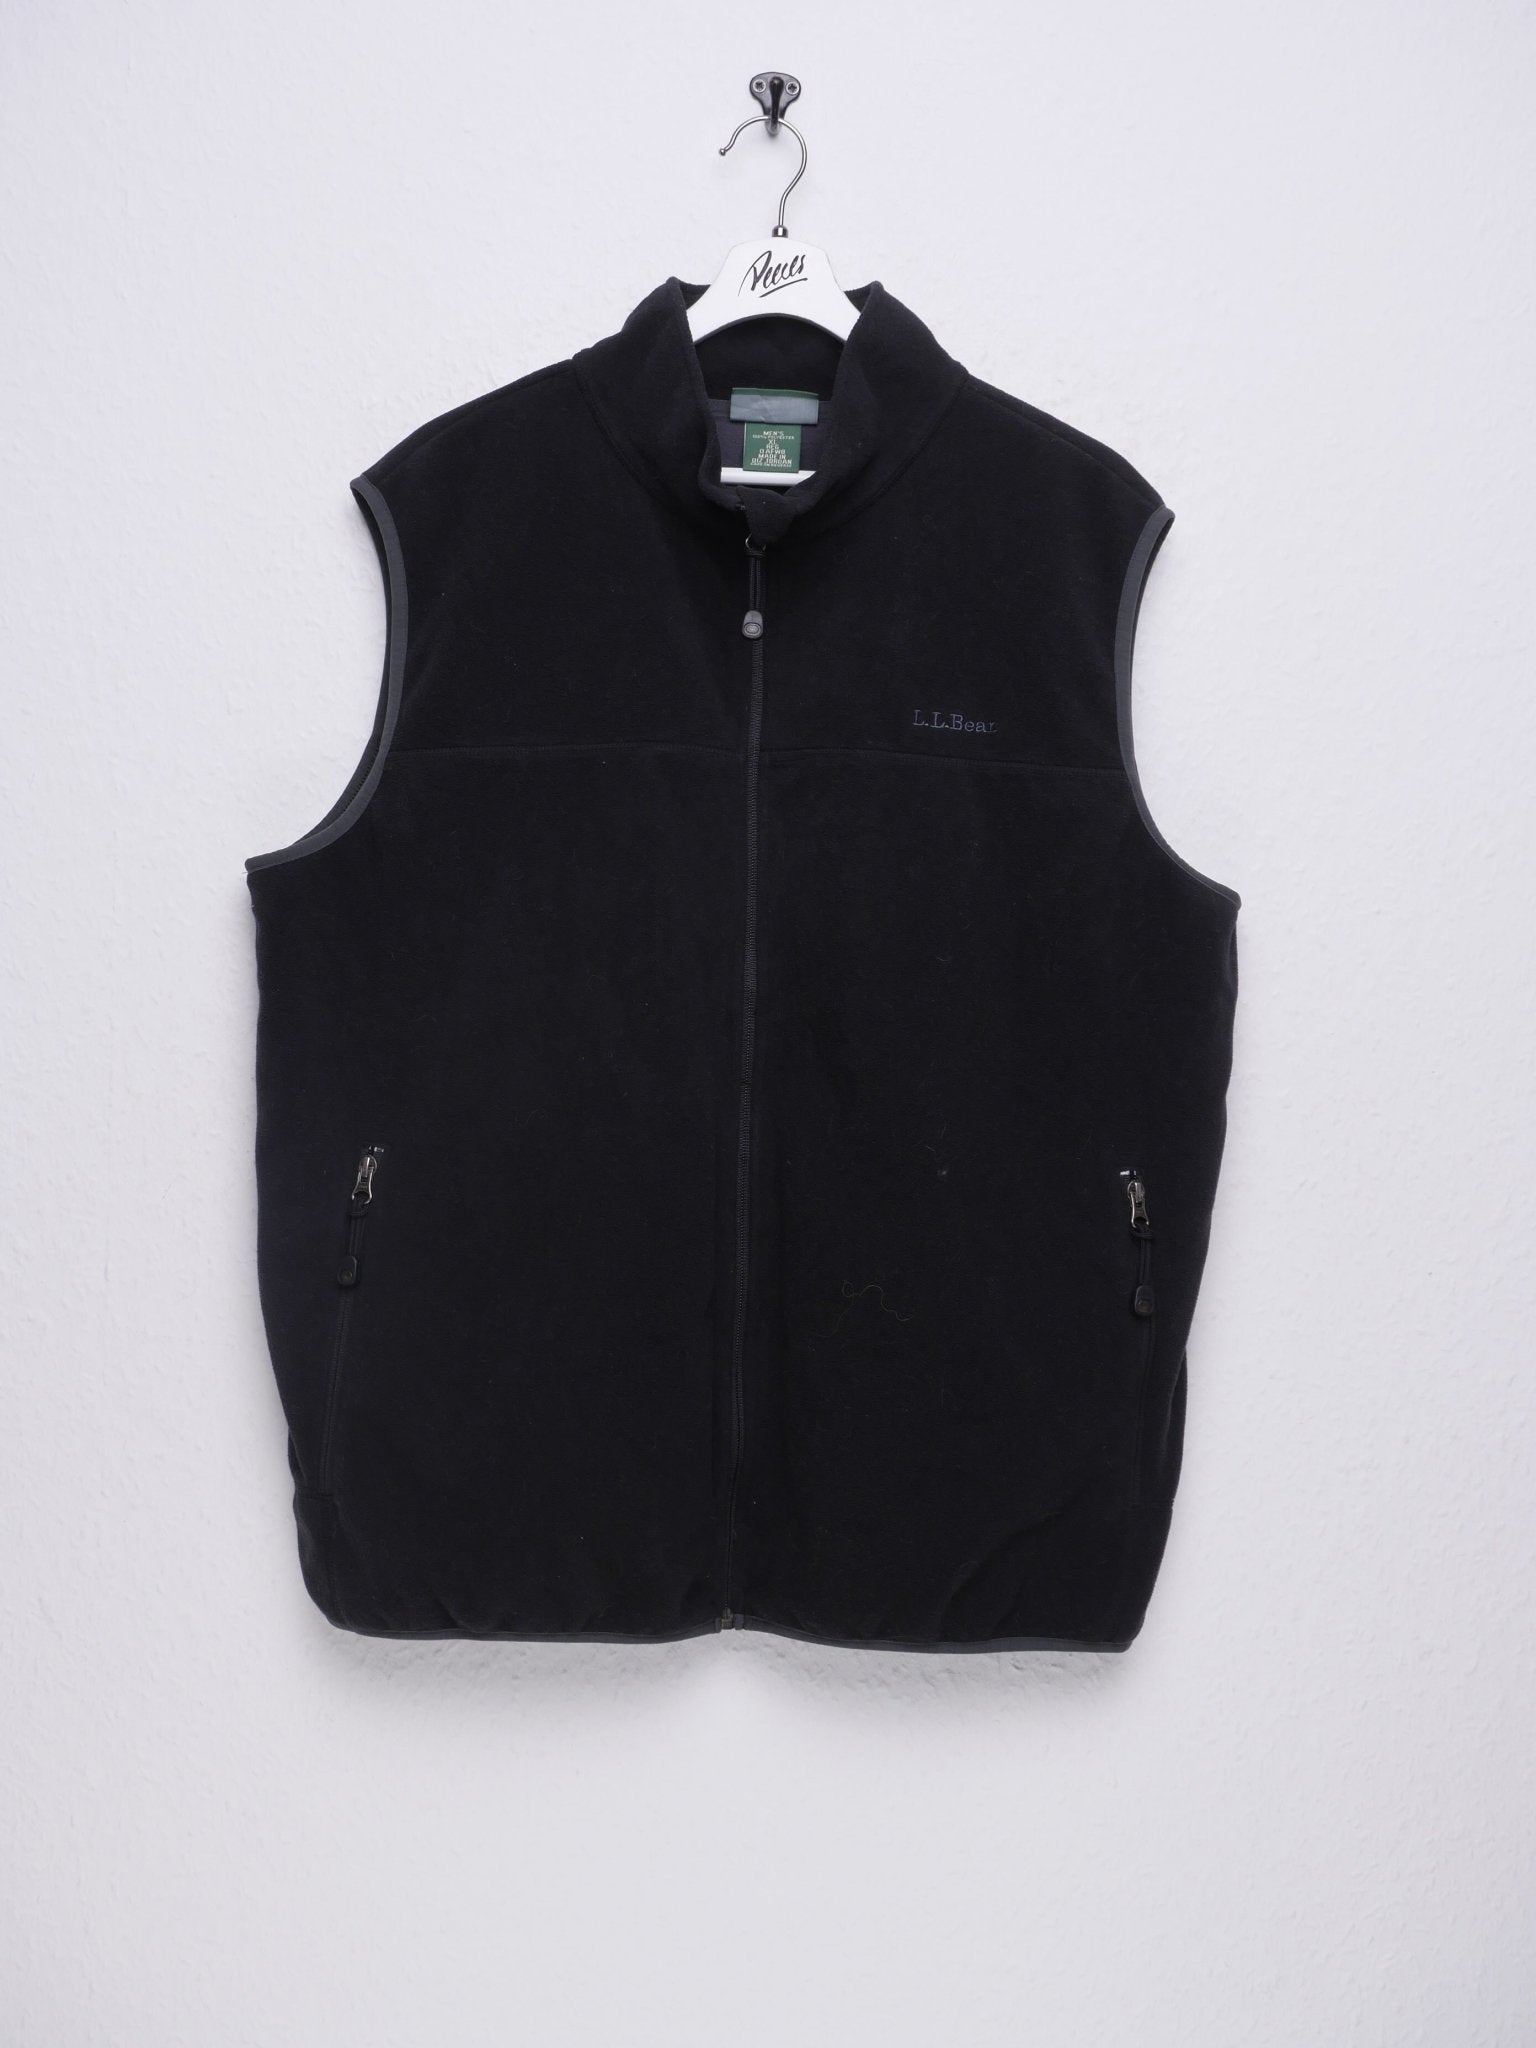 LL Bean embroidered Logo black basic Fleece Vest Jacke - Peeces